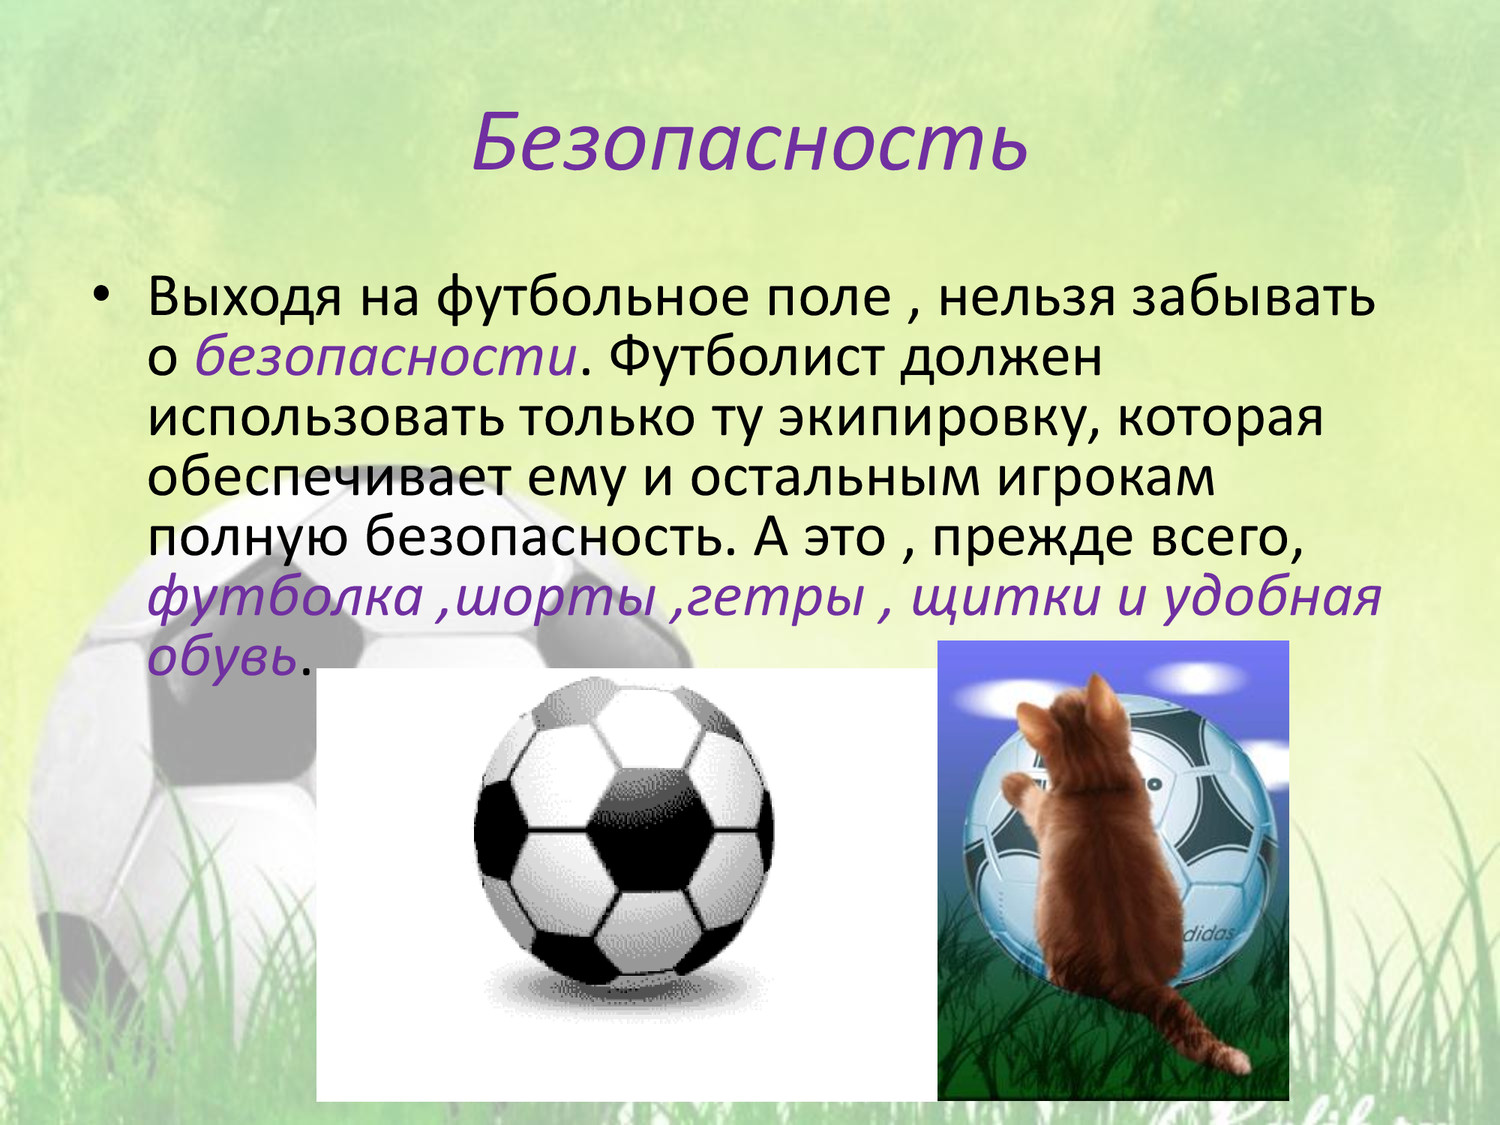 Игра в футбол реферат. Футбол презентация. Презентация на тему футбол. Доклад про футбол. Футбольные темы для проекта.